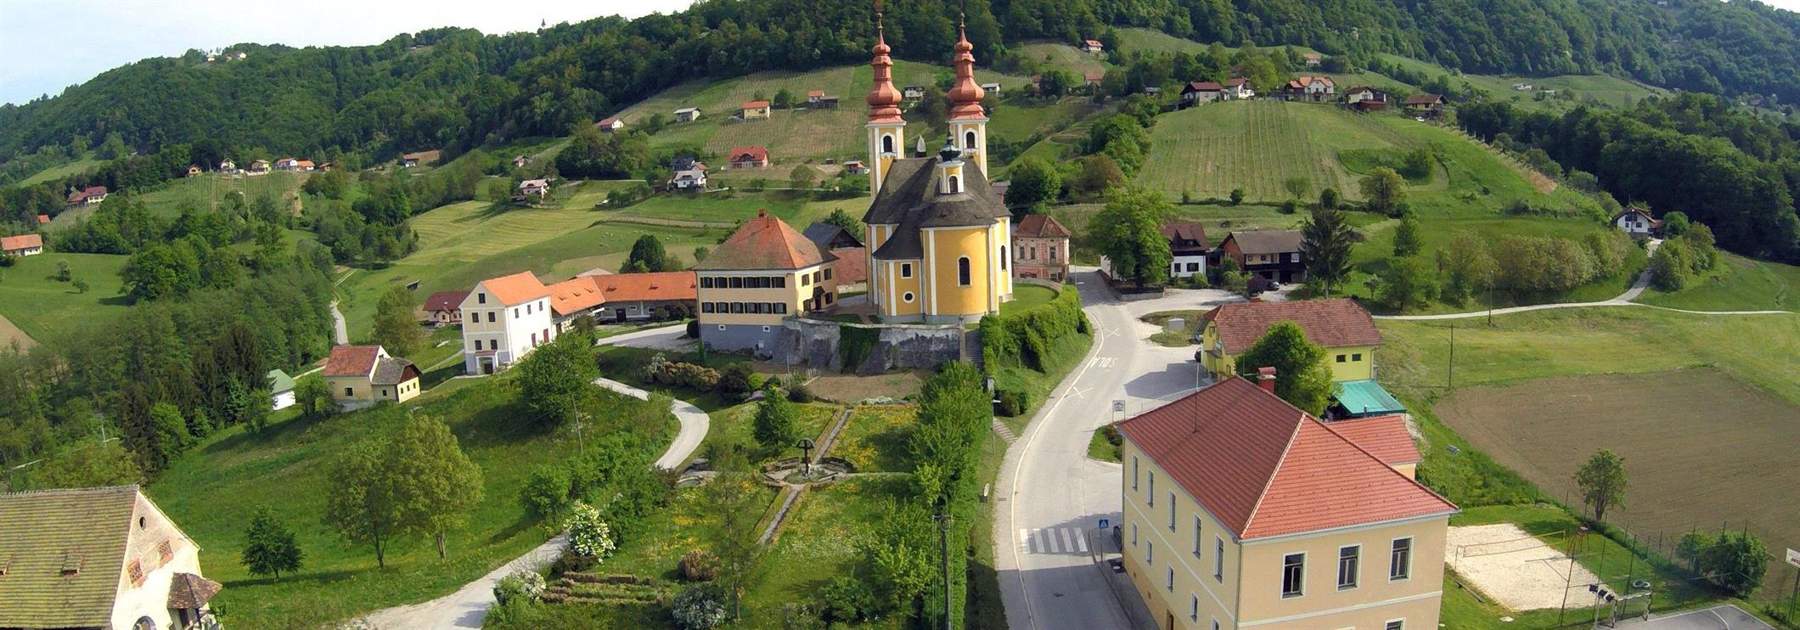 Šmarje pri Jelšah, Slovenia. City travel guide – Attractions, Activities, Local cuisine